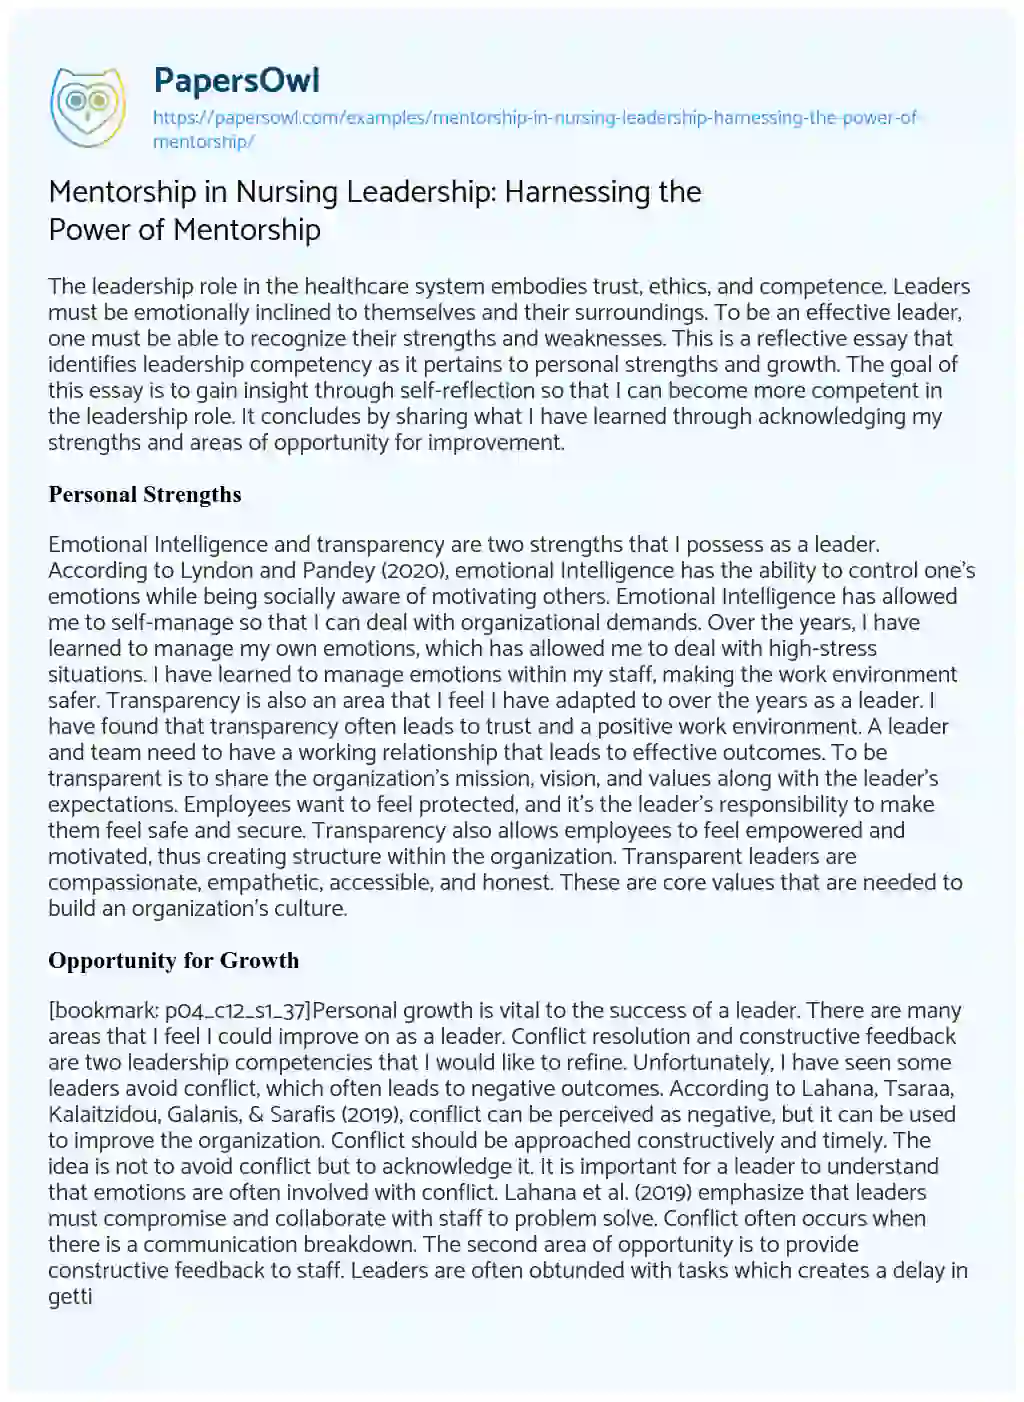 Essay on Mentorship in Nursing Leadership: Harnessing the Power of Mentorship